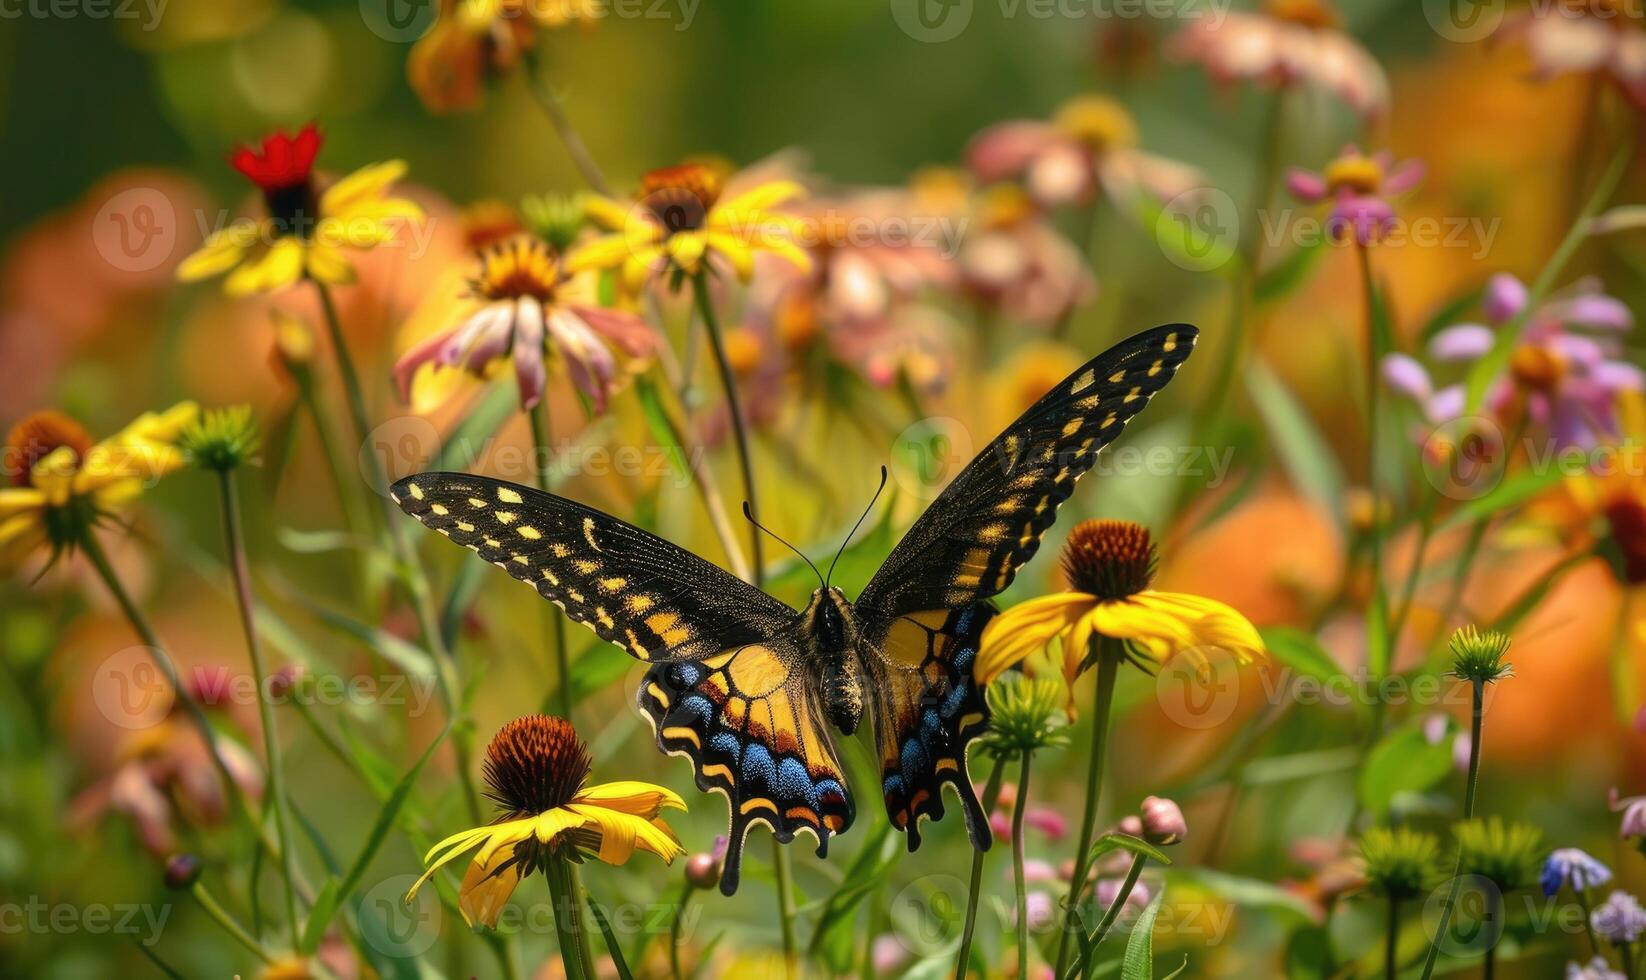 borboleta no meio flores silvestres, fechar-se visualizar, seletivo foco, Primavera natureza foto